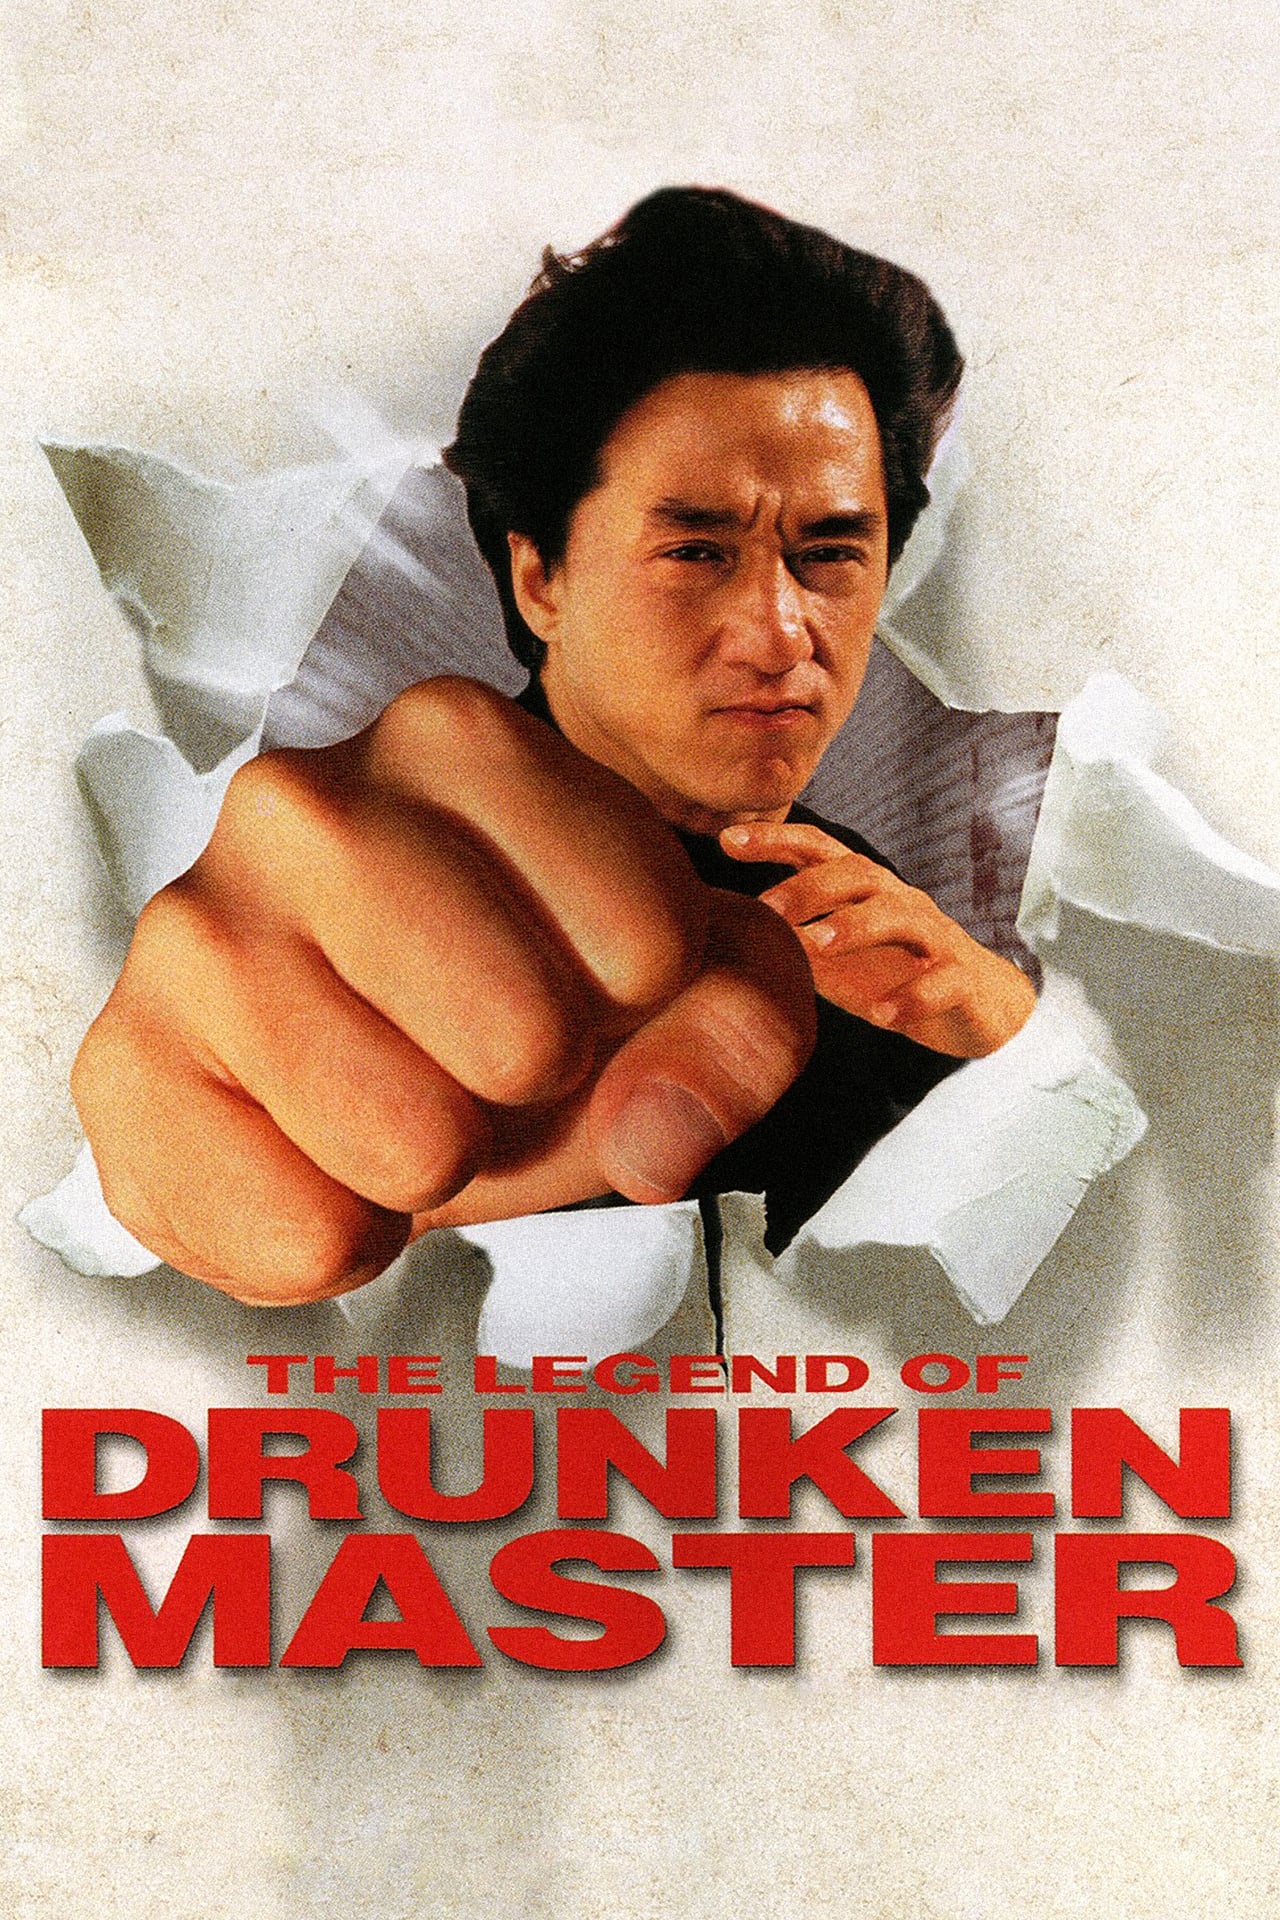 Plakát pro film “Legenda o opilém Mistrovi”